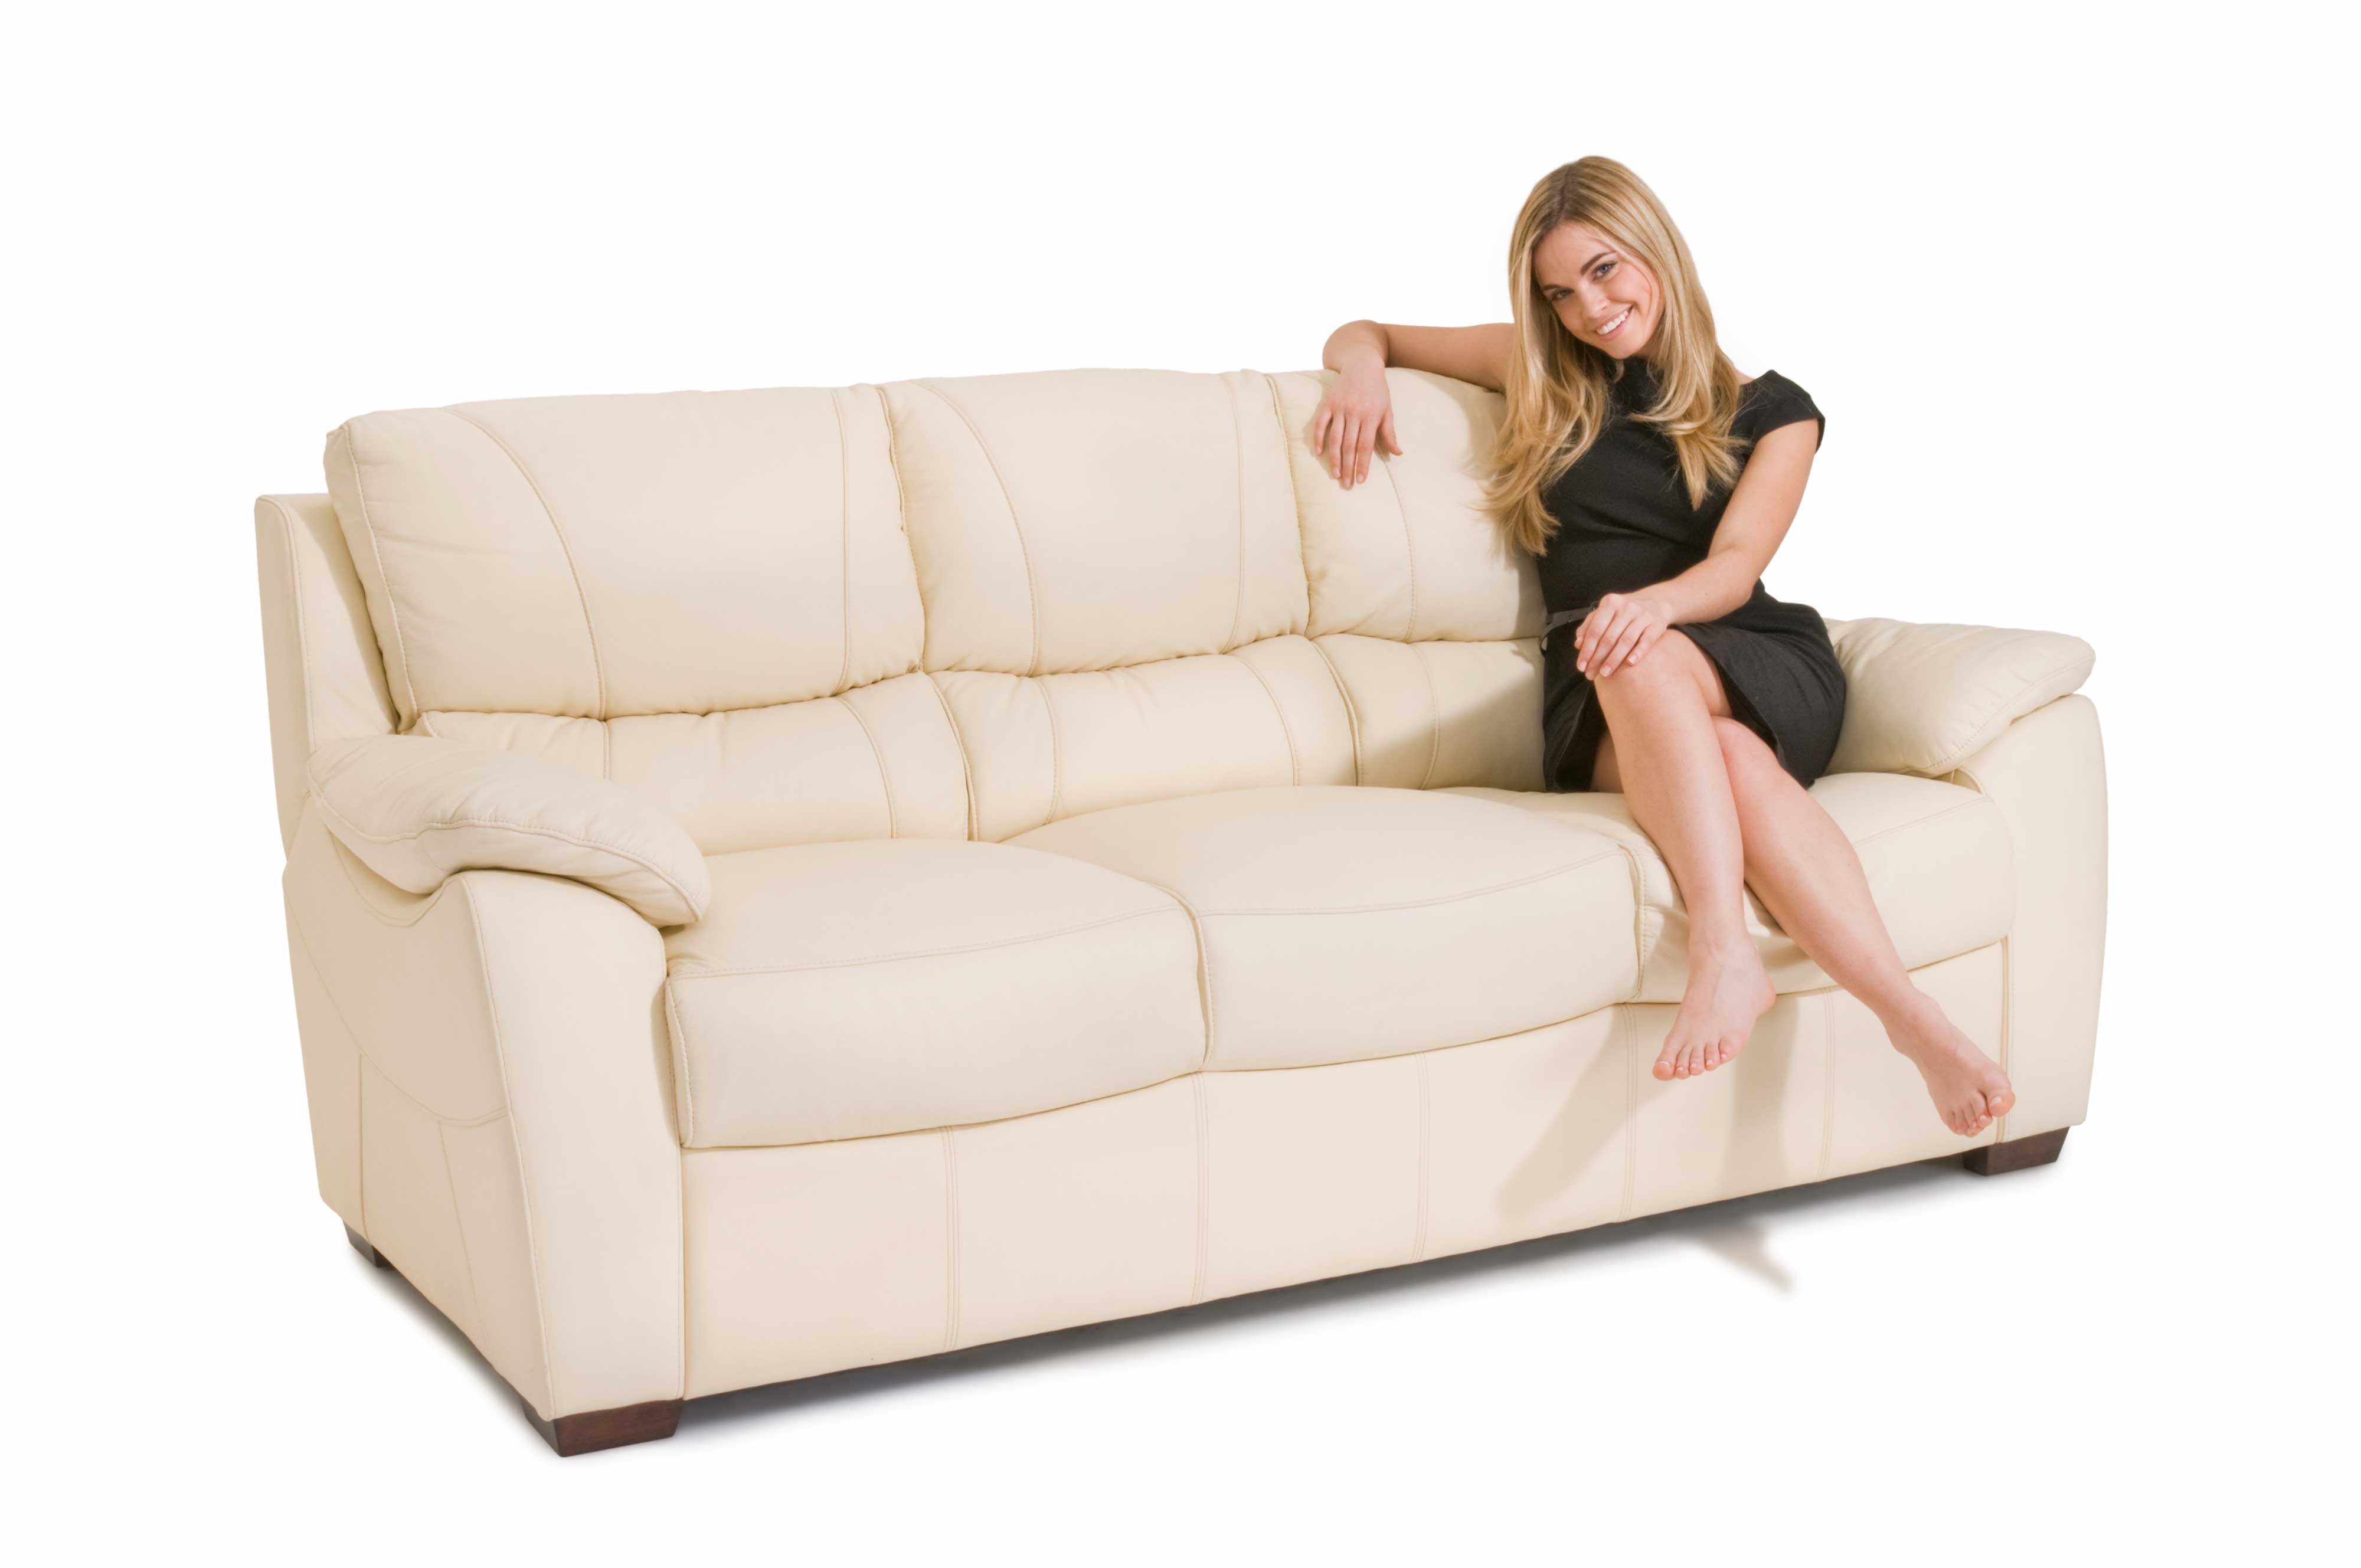 Casting sofa image